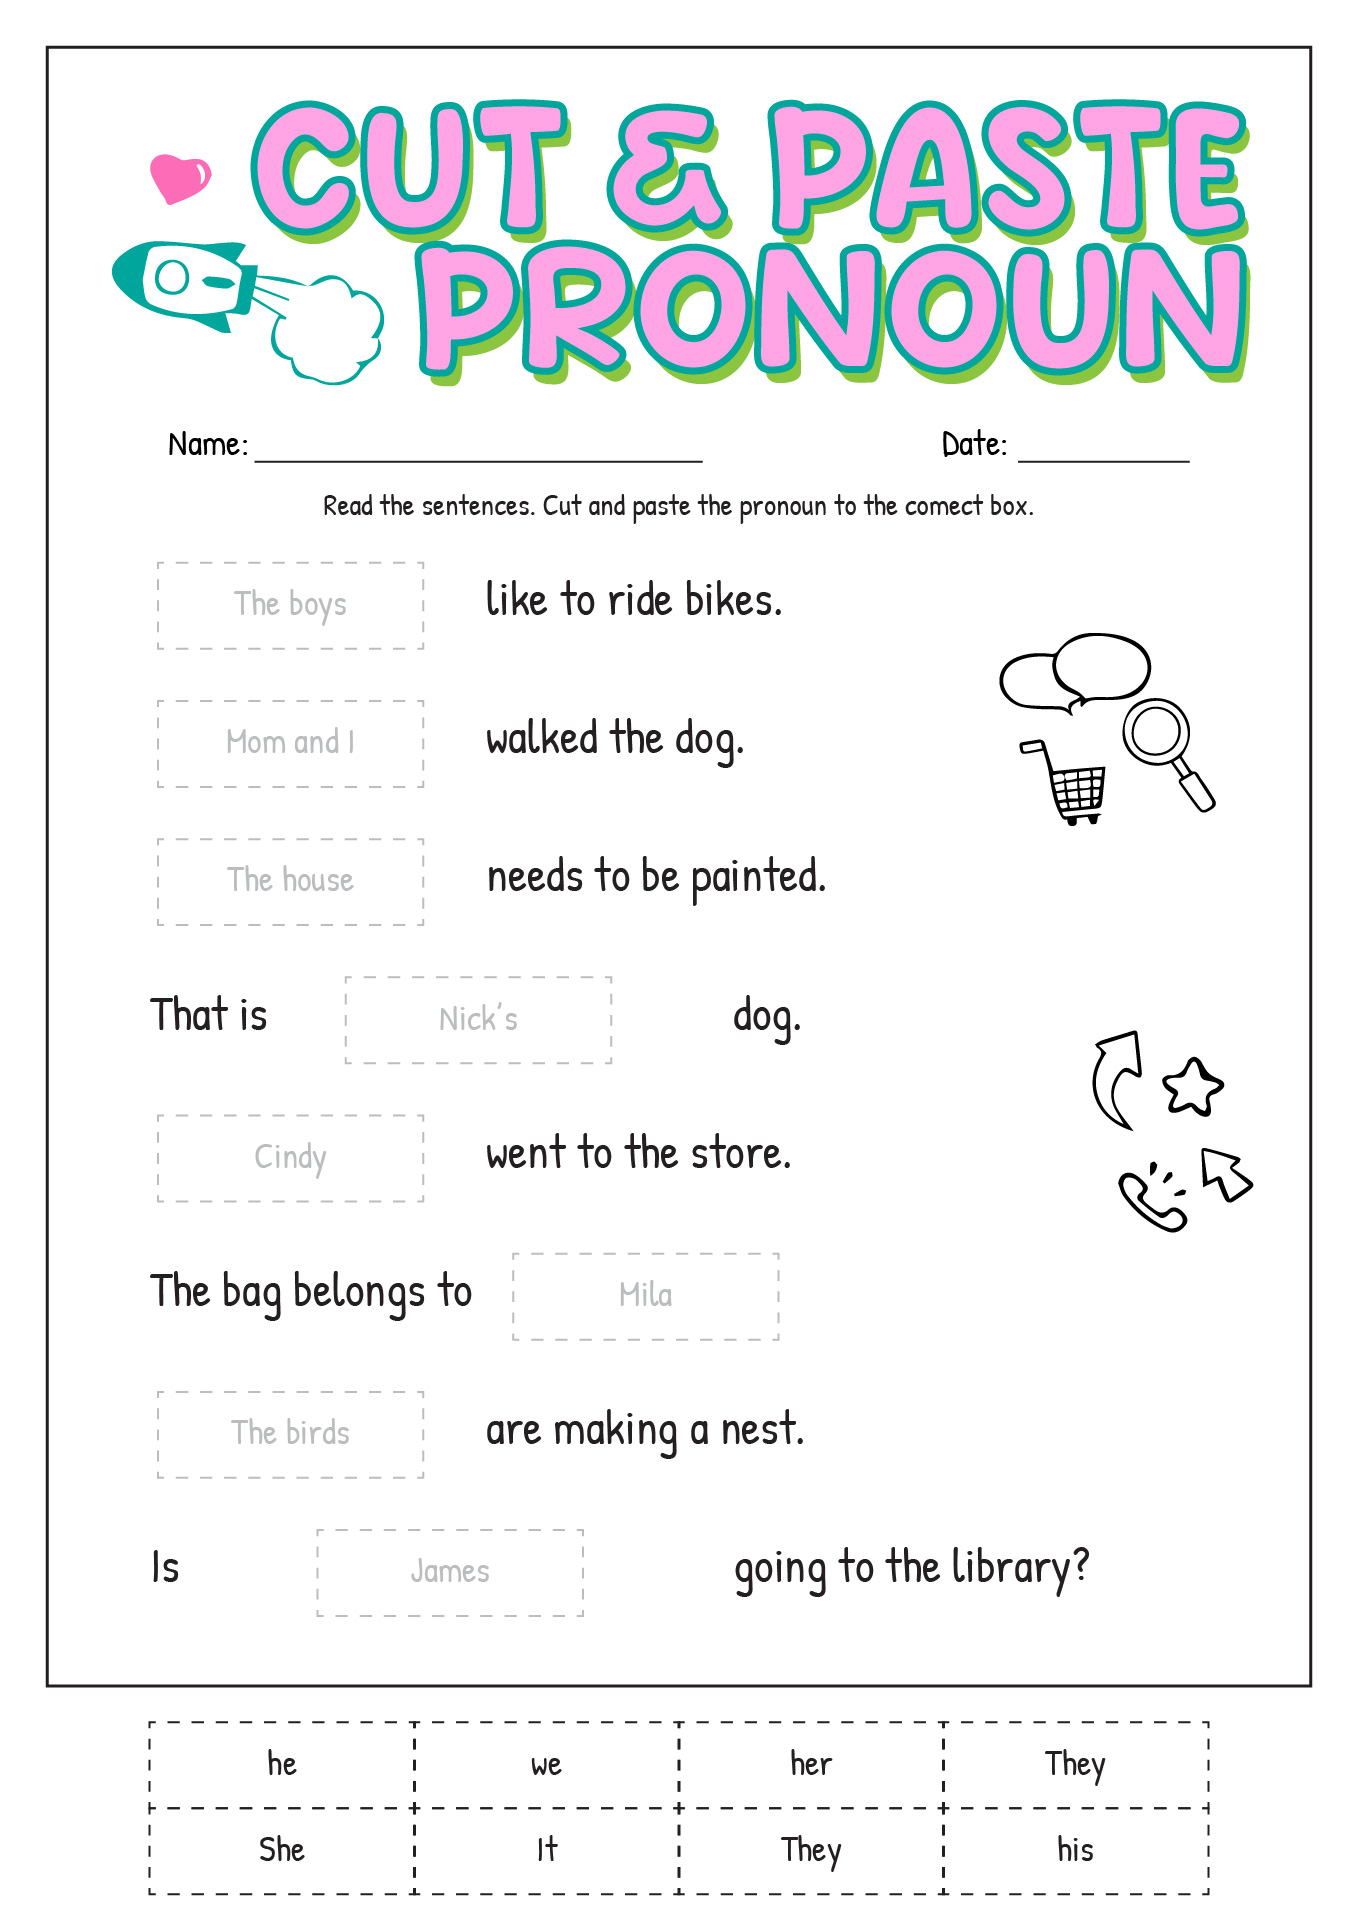 Cut and Paste Pronoun Worksheet